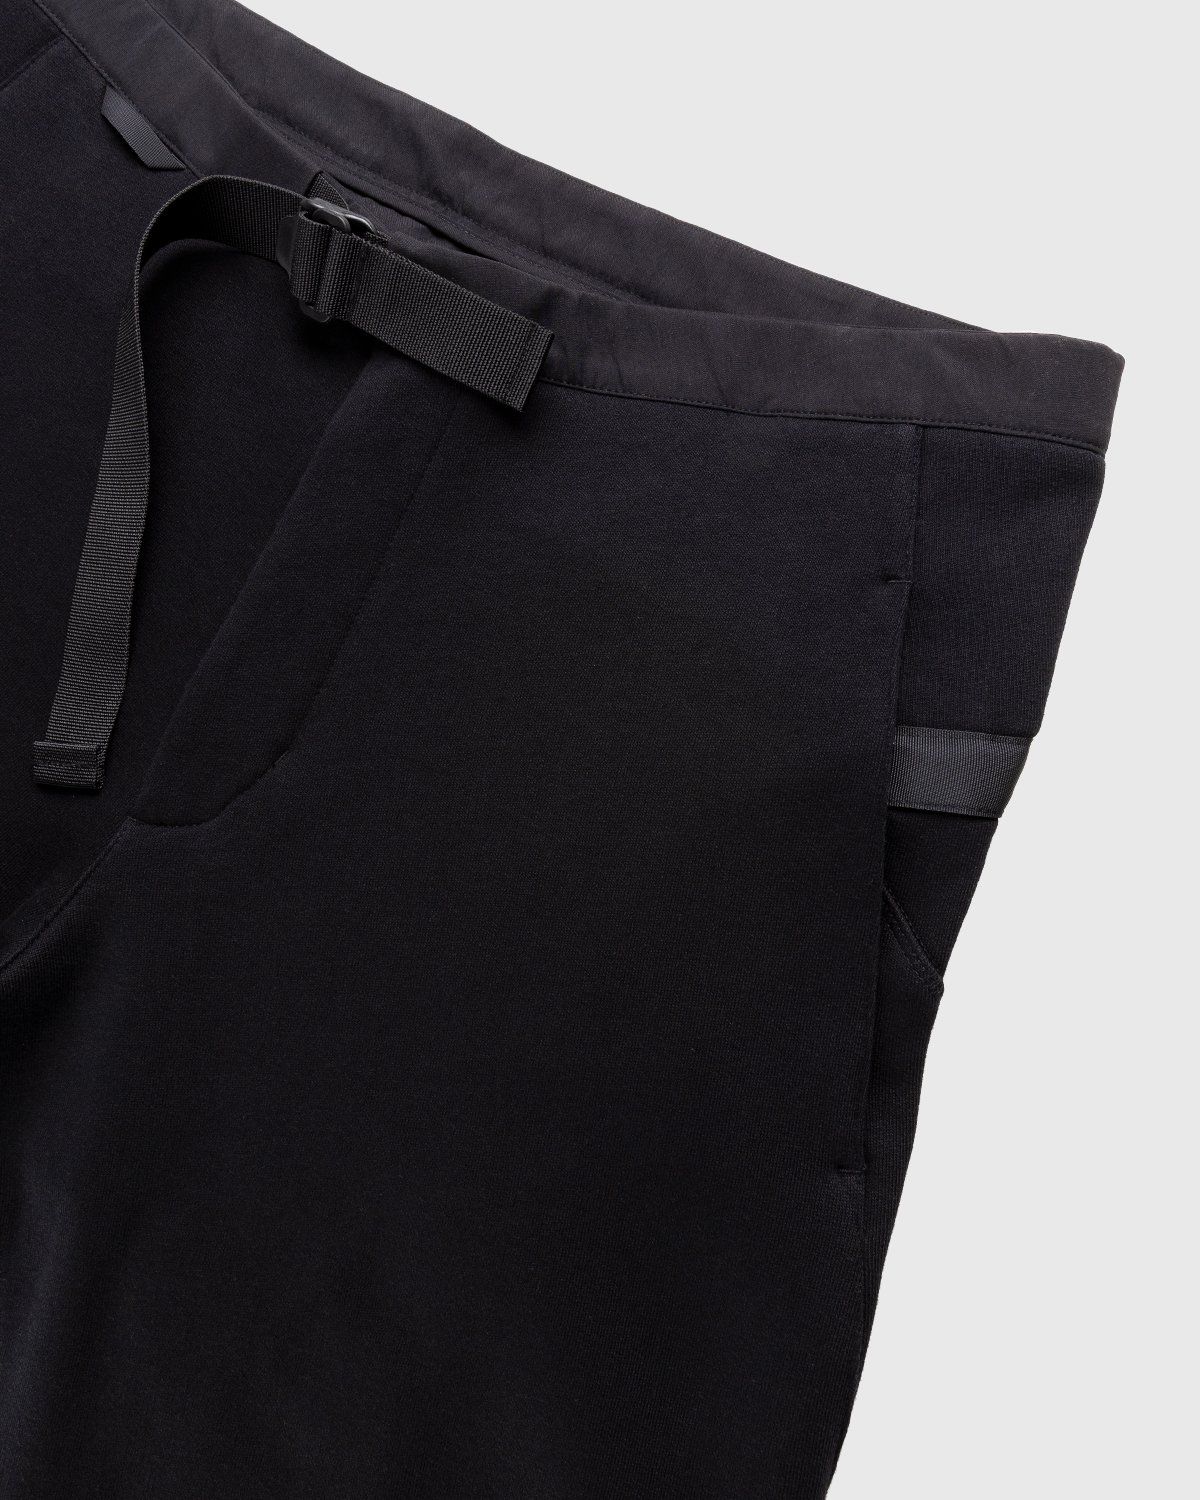 ACRONYM – P39-PR Pants Black - Pants - Black - Image 3